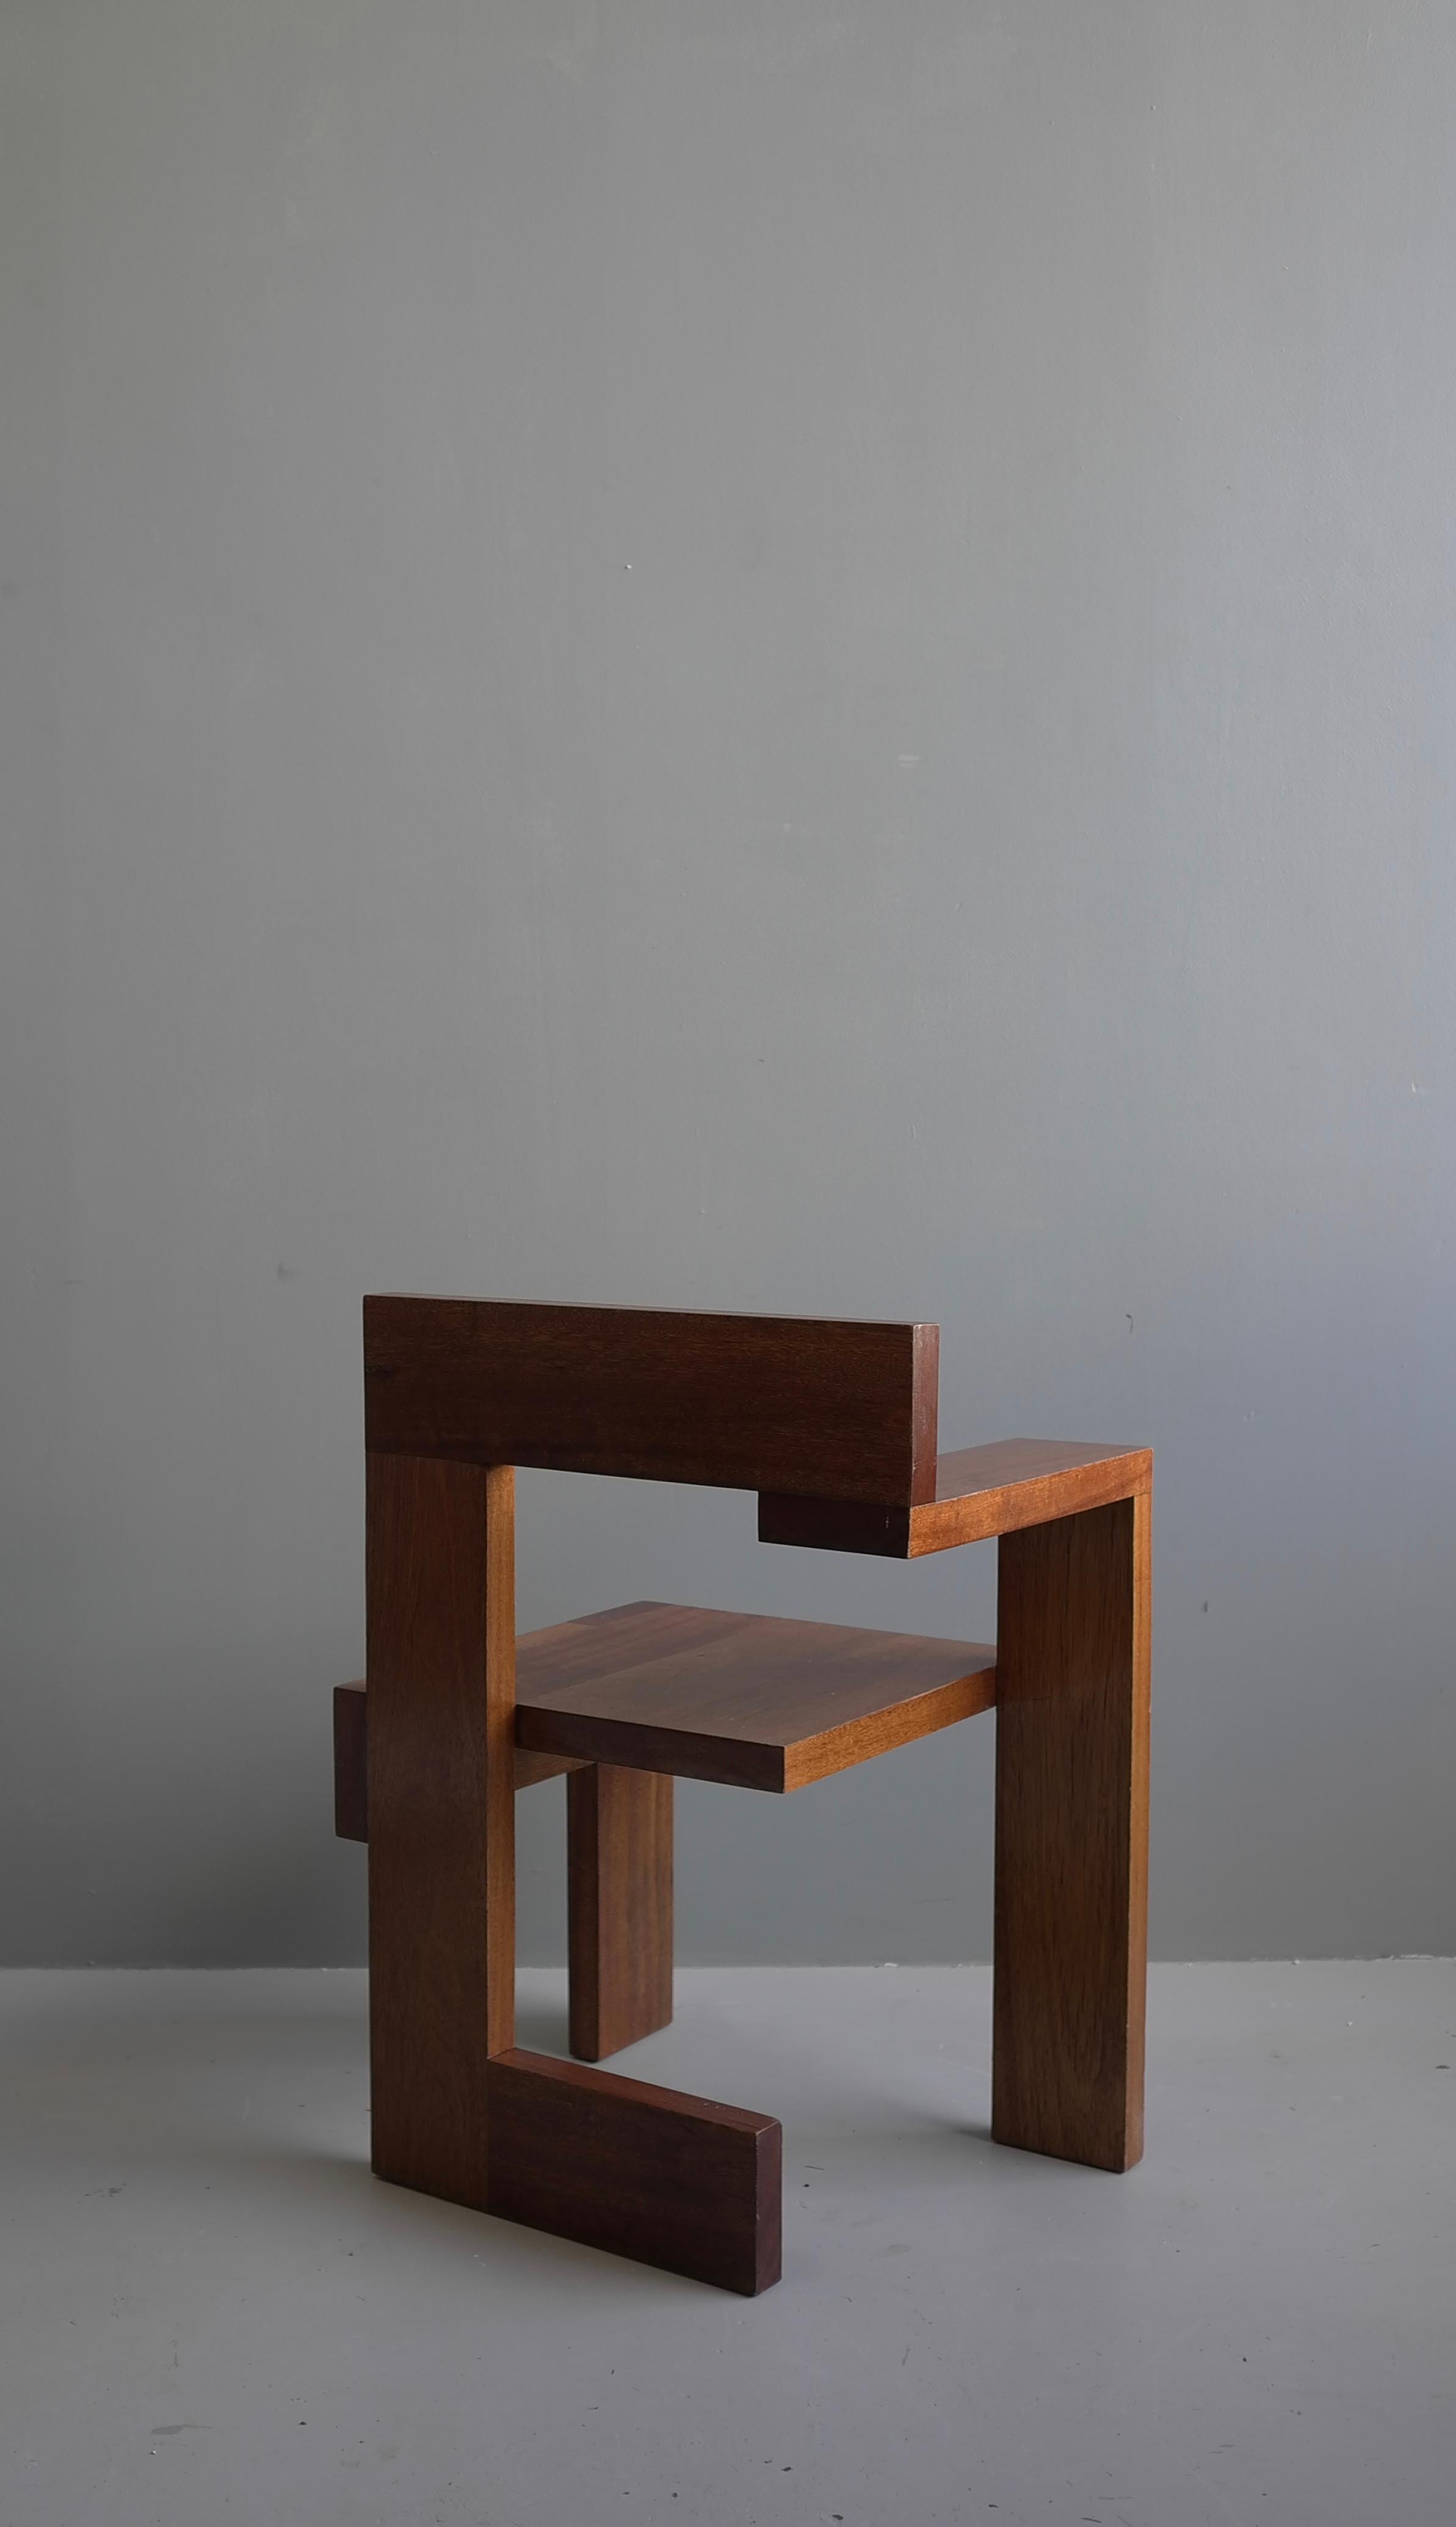 Dutch Modernist Sculptural Steltman Chair in Meranti Wood, in Style of Gerrit Rietveld